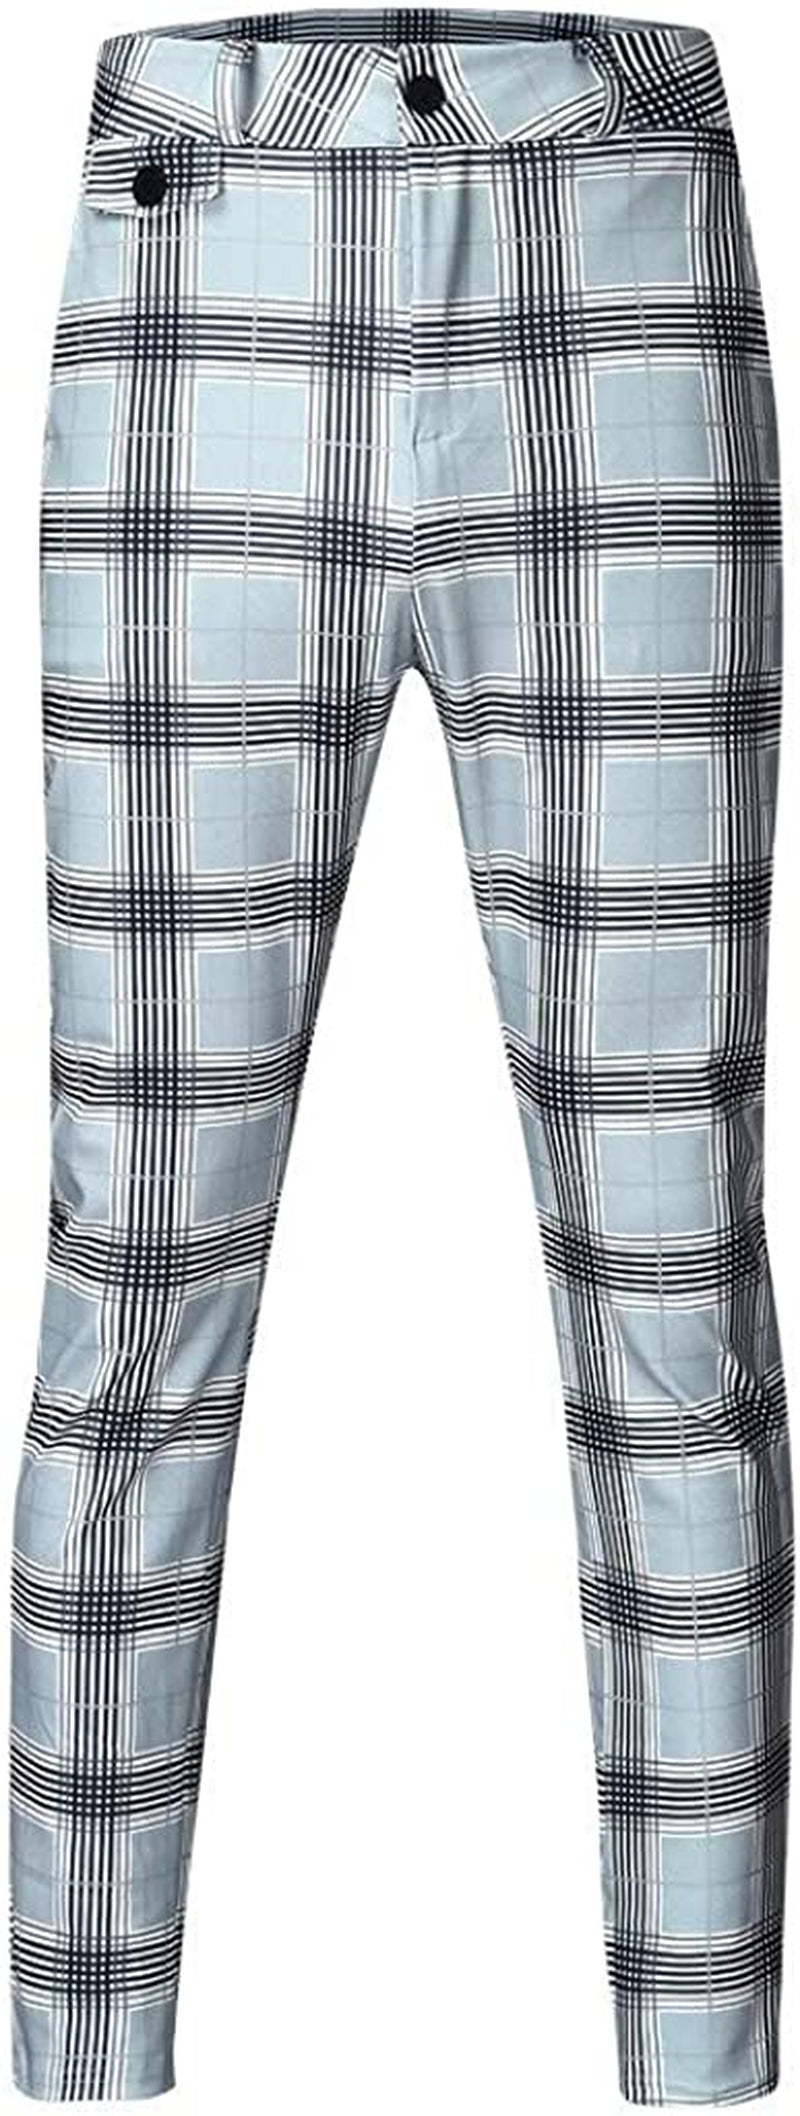 Men Dress Pants,Casual Plaid Stretch Flat-Front Skinny Business Pencil Long Pants Trousers Pocket